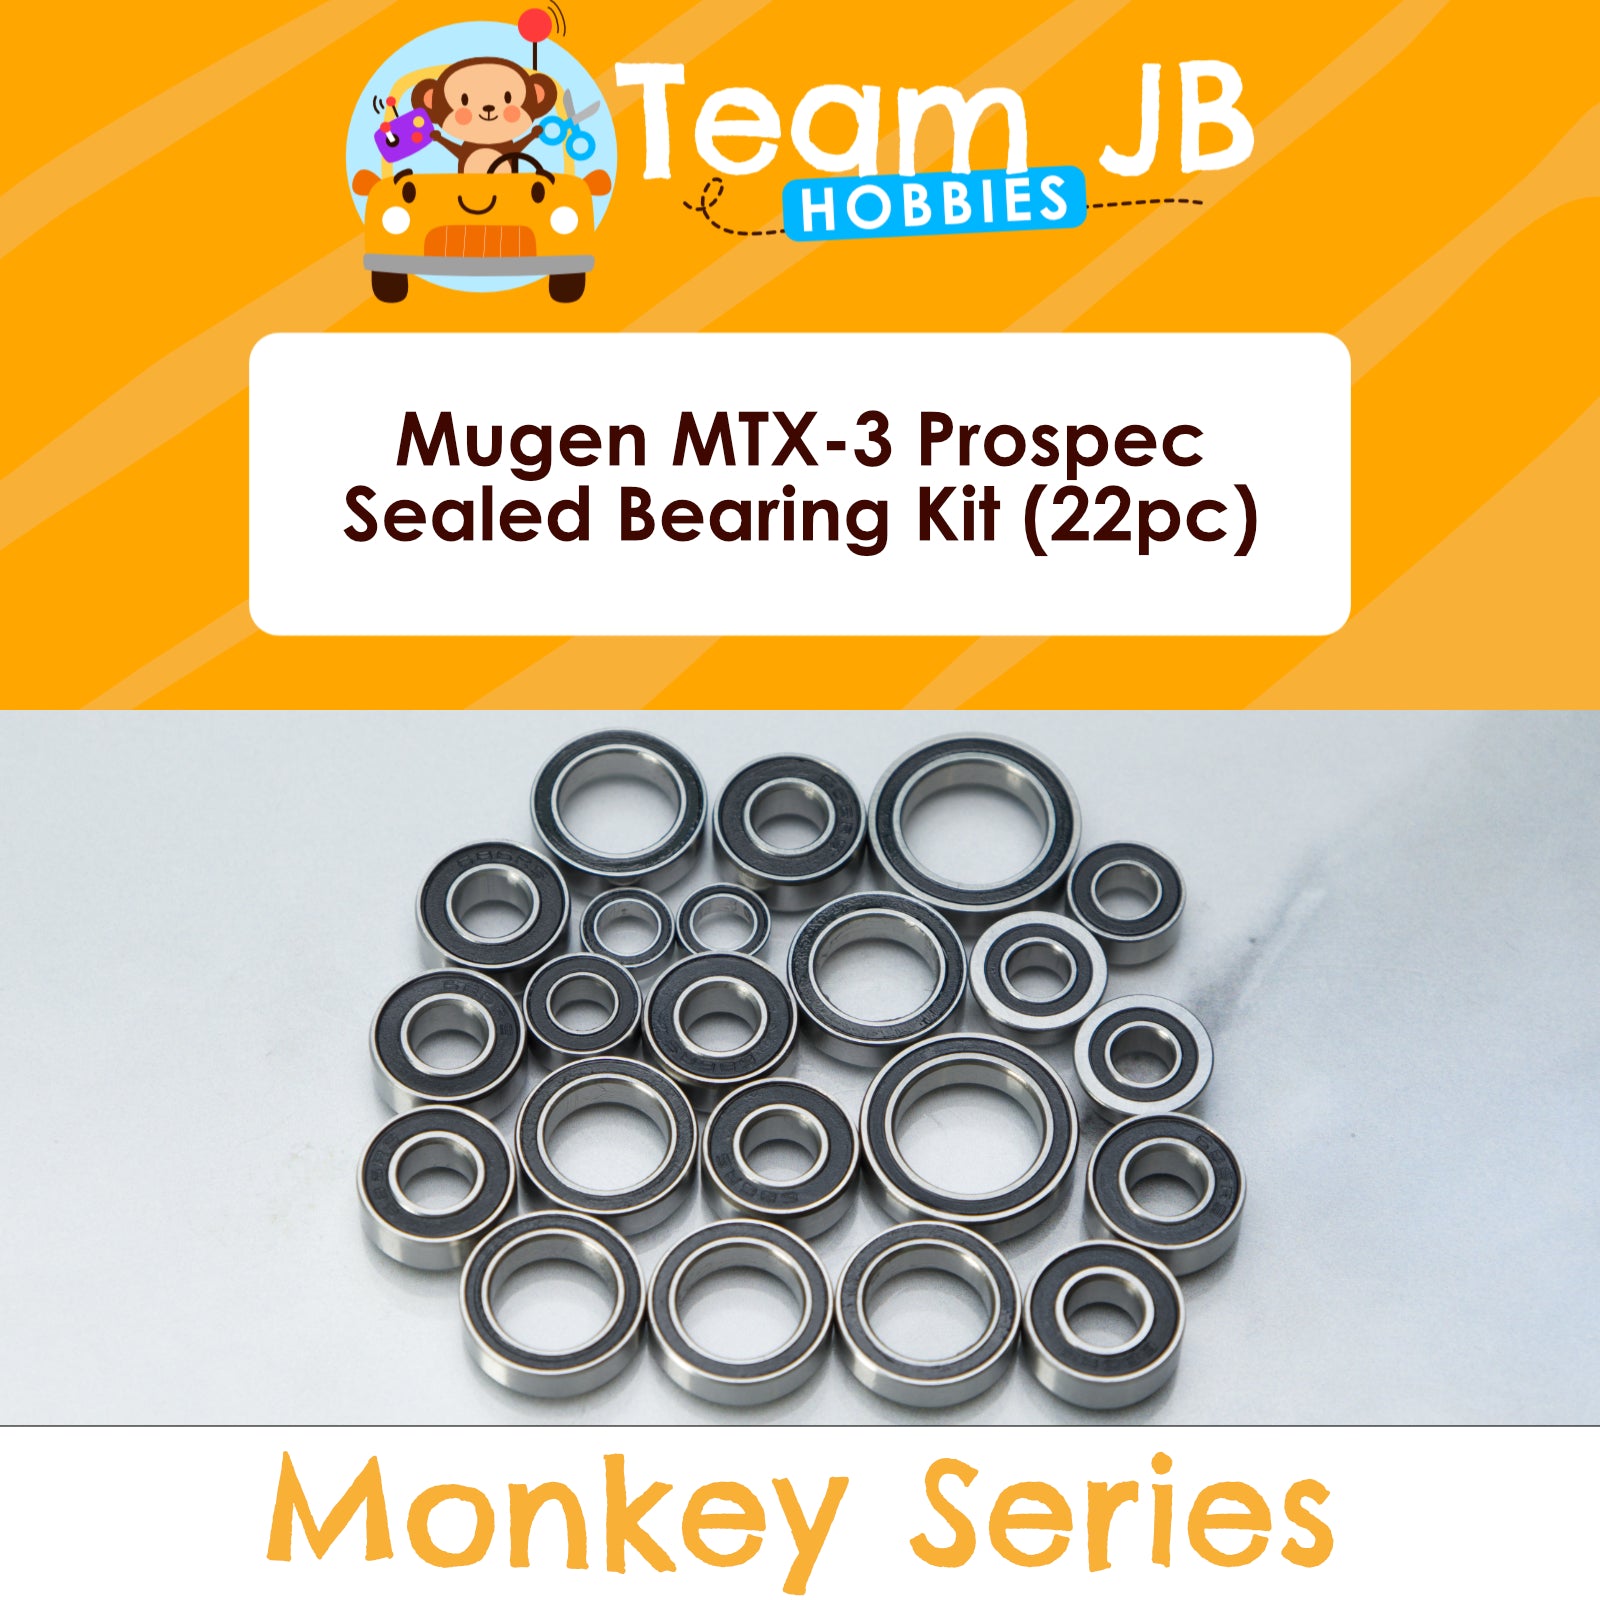 Mugen MTX-3 Prospec - Sealed Bearing Kit